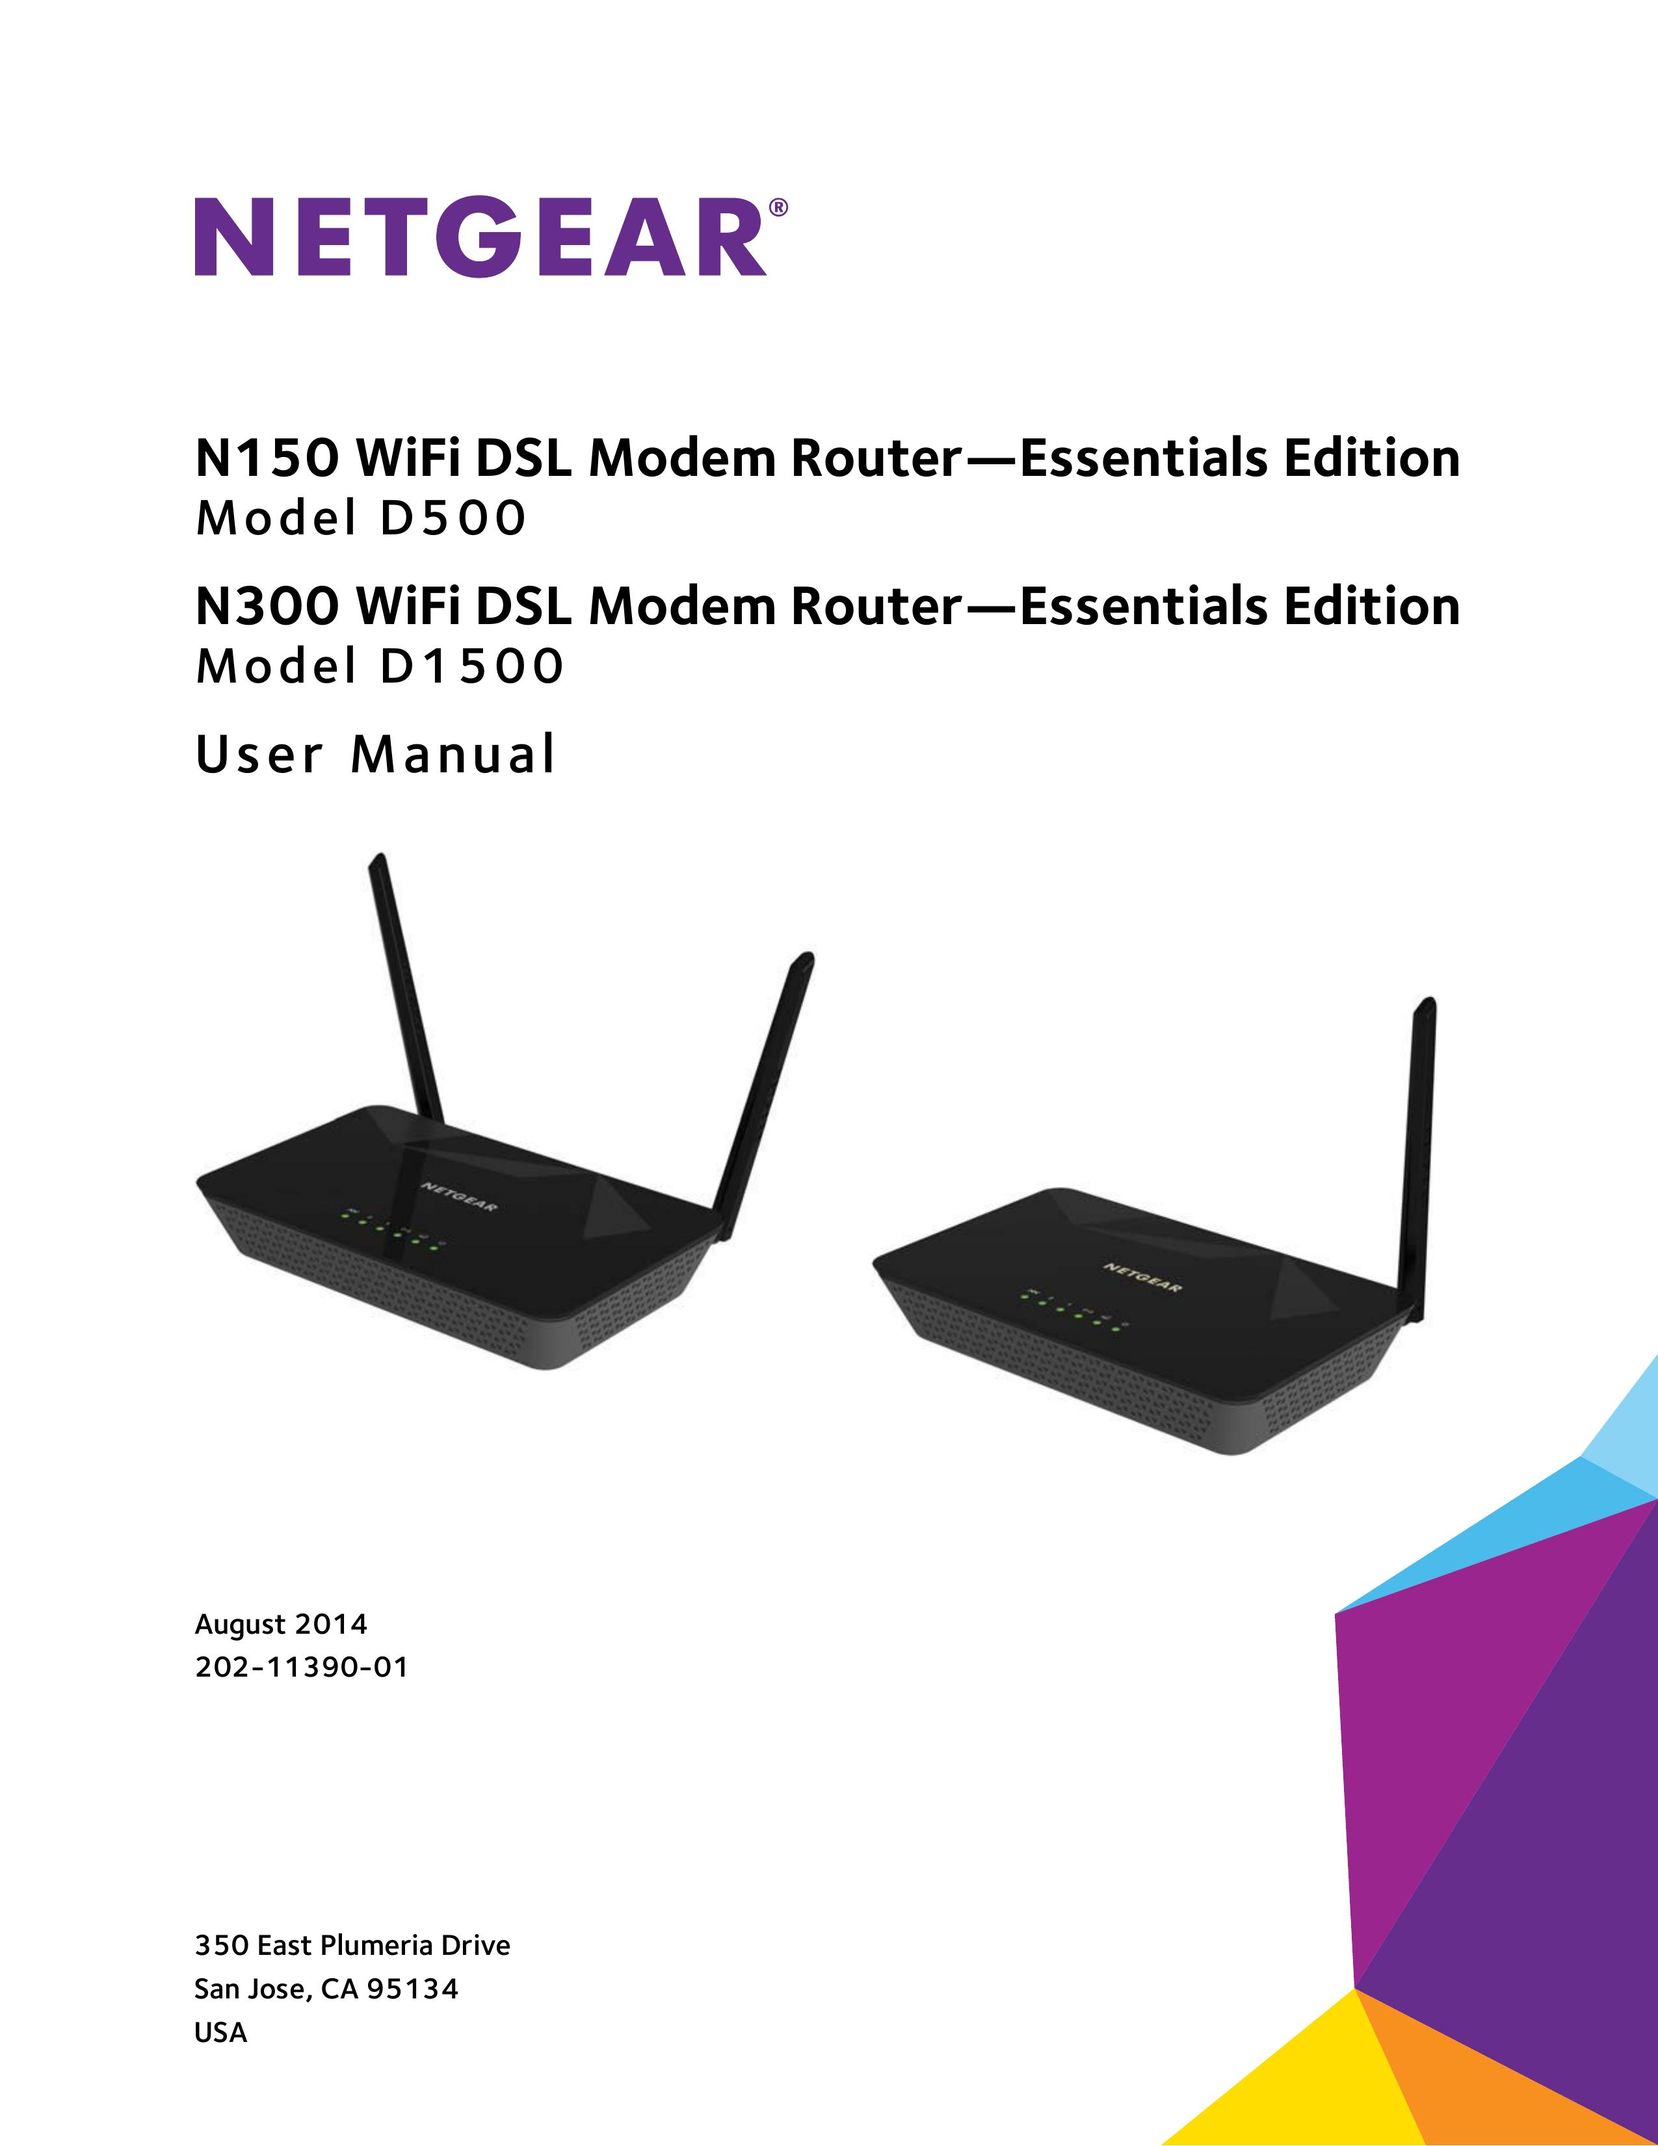 NETGEAR D500 and D1500 Network Router User Manual